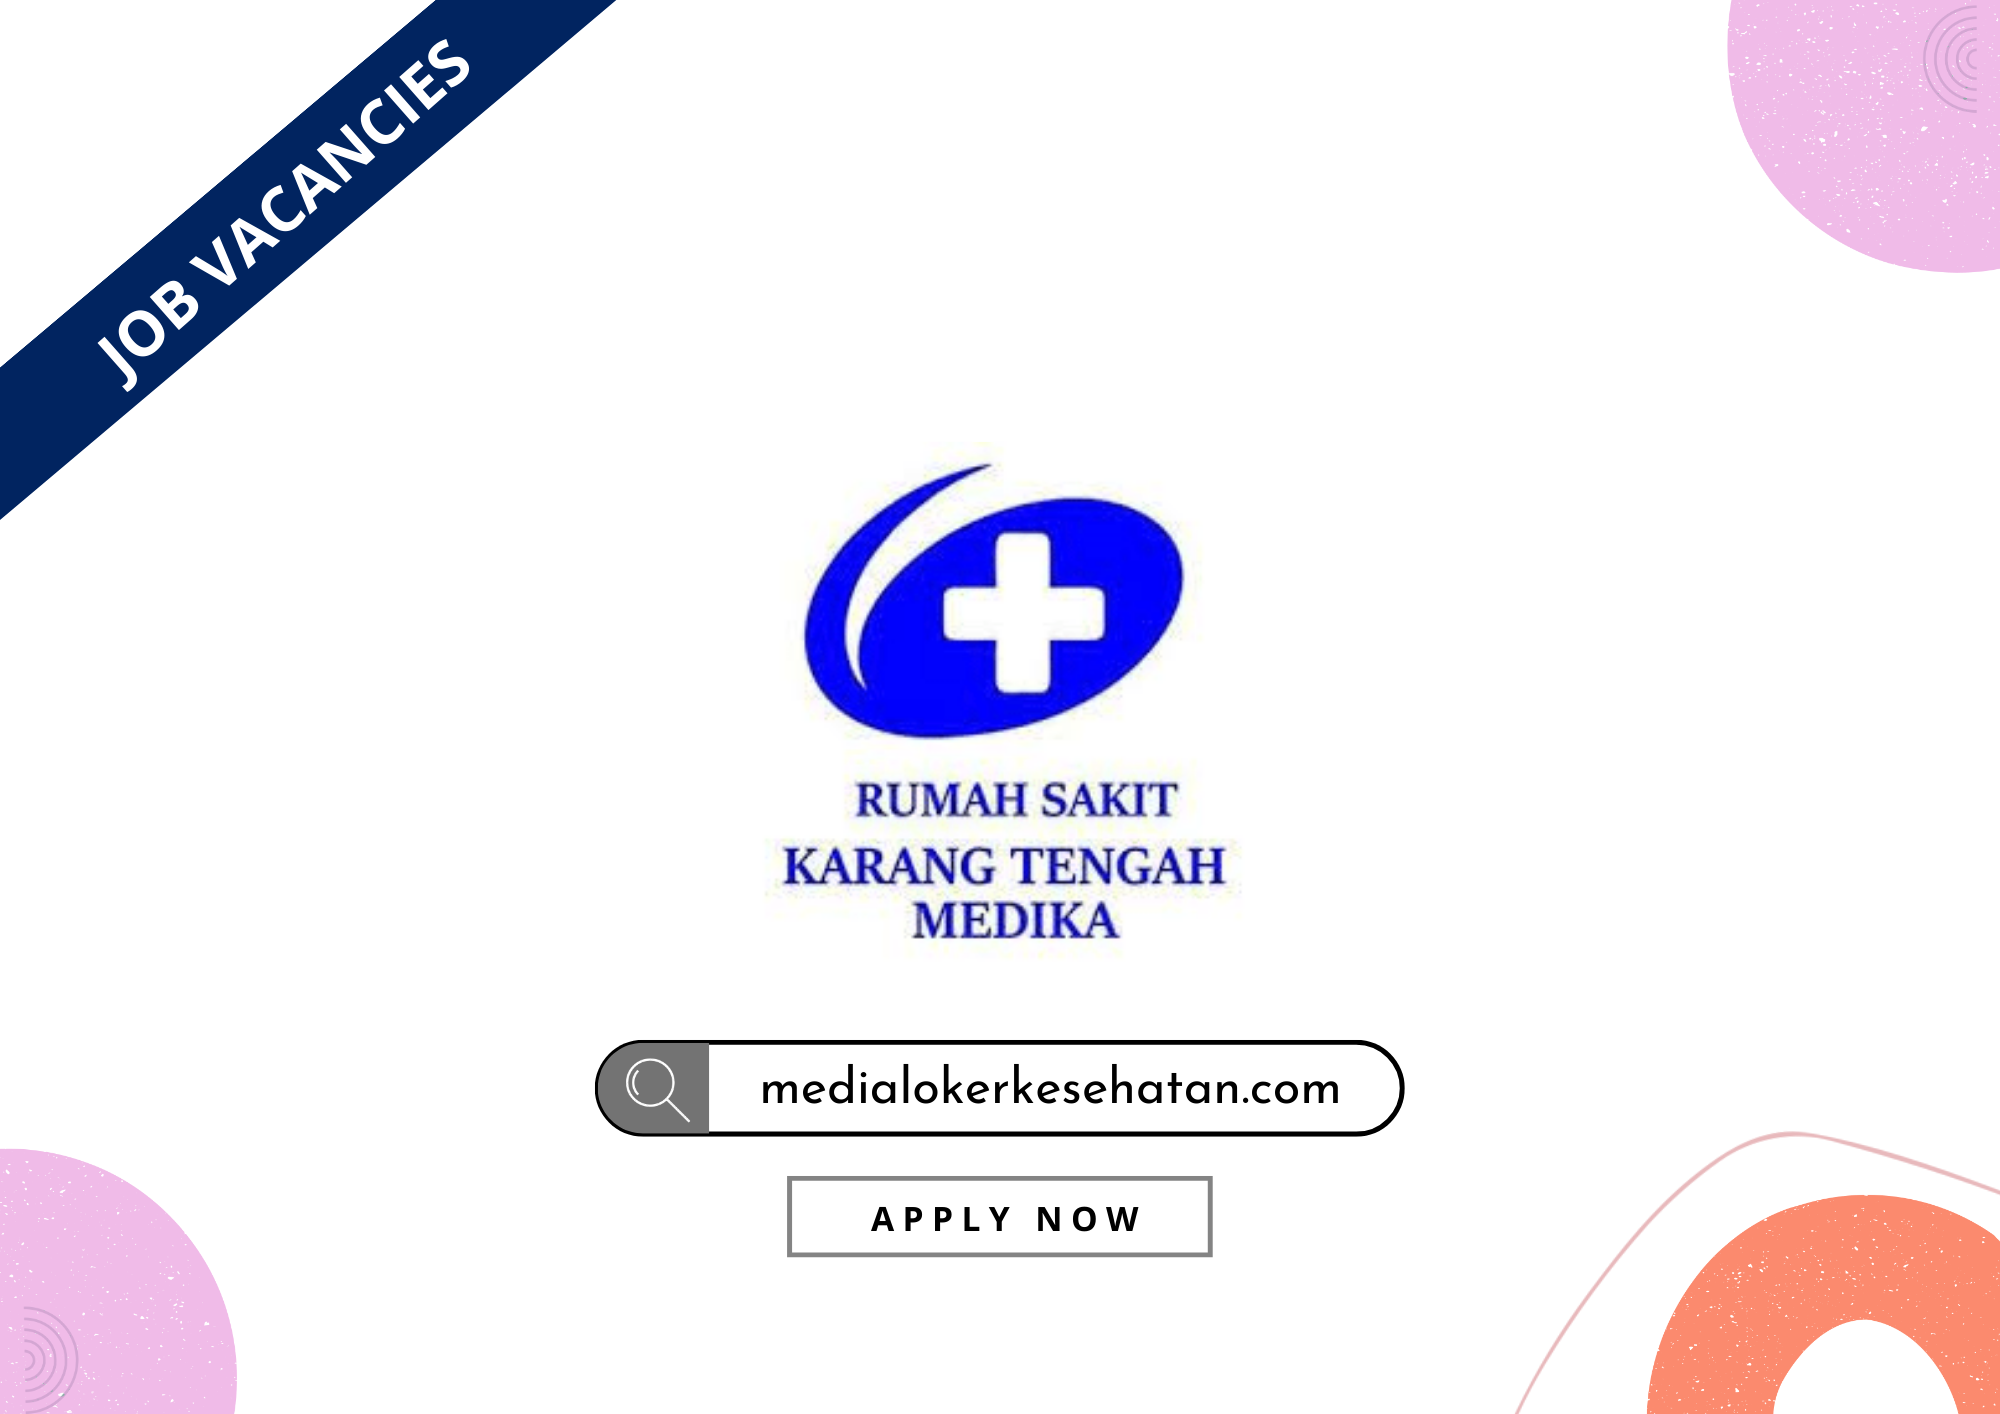 Lowongan Kerja Rumah Sakit Karang Tengah Medika post thumbnail image